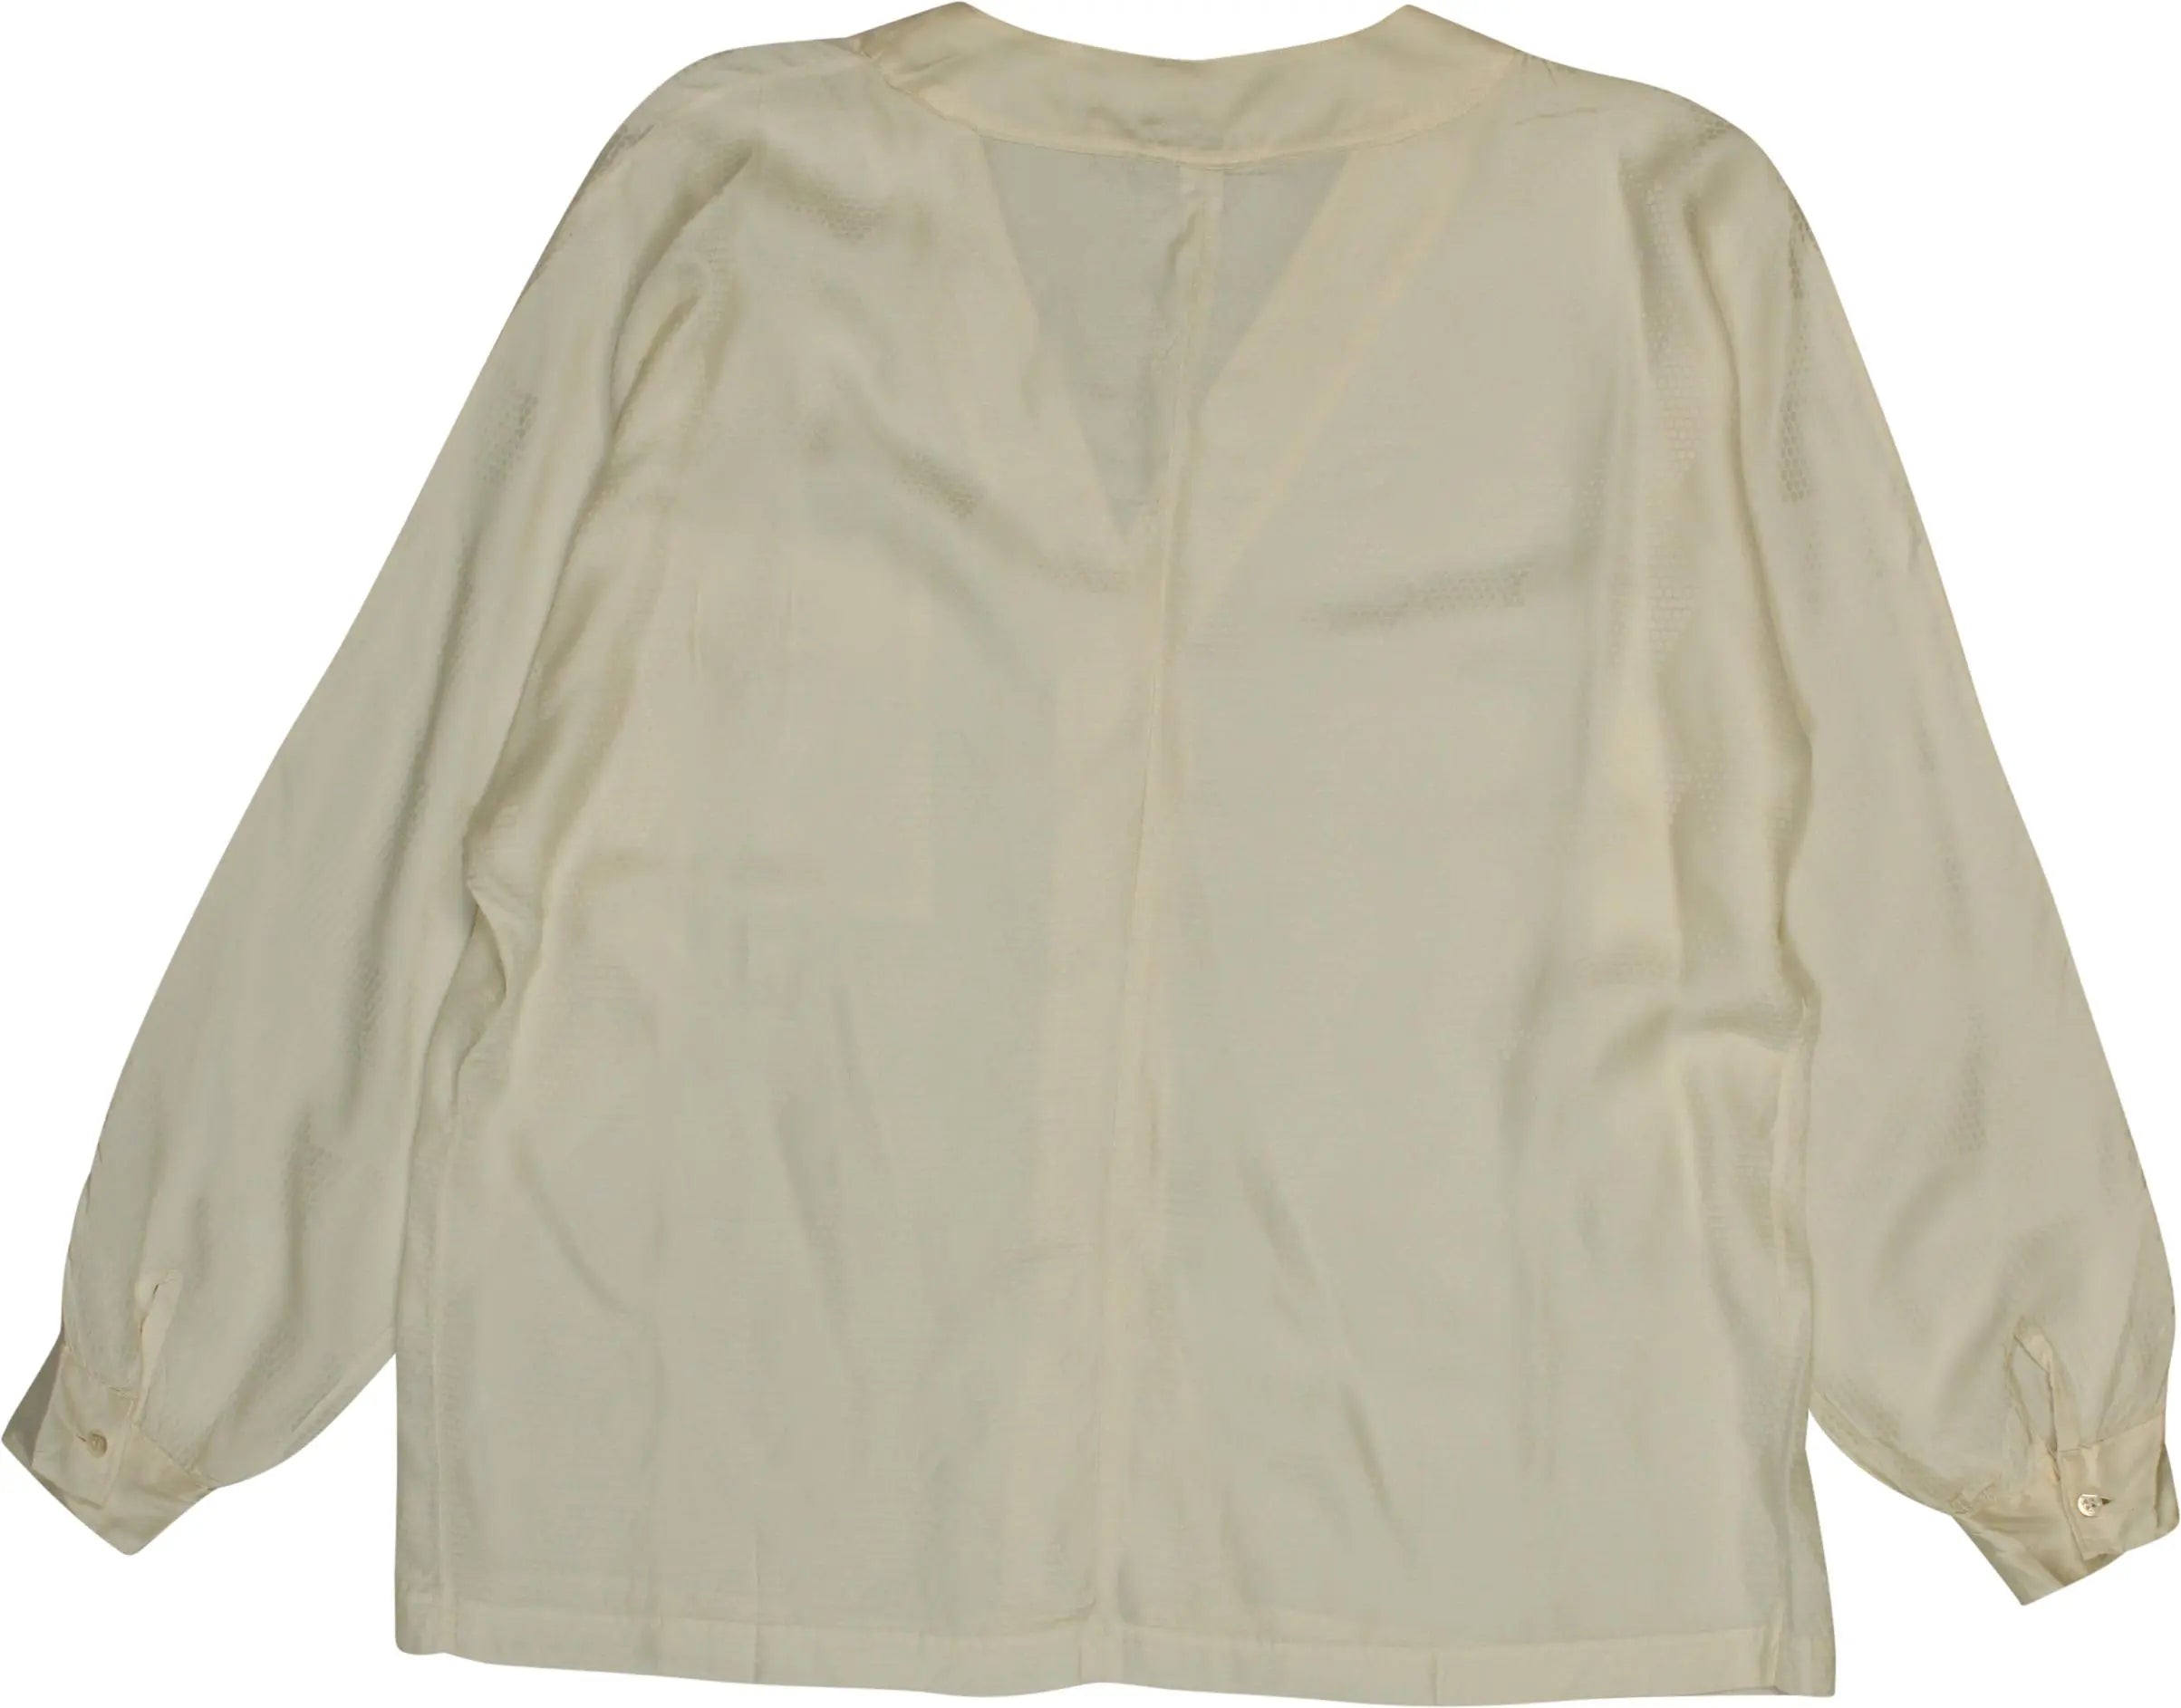 Claudio La Viola - Silk Shirt- ThriftTale.com - Vintage and second handclothing